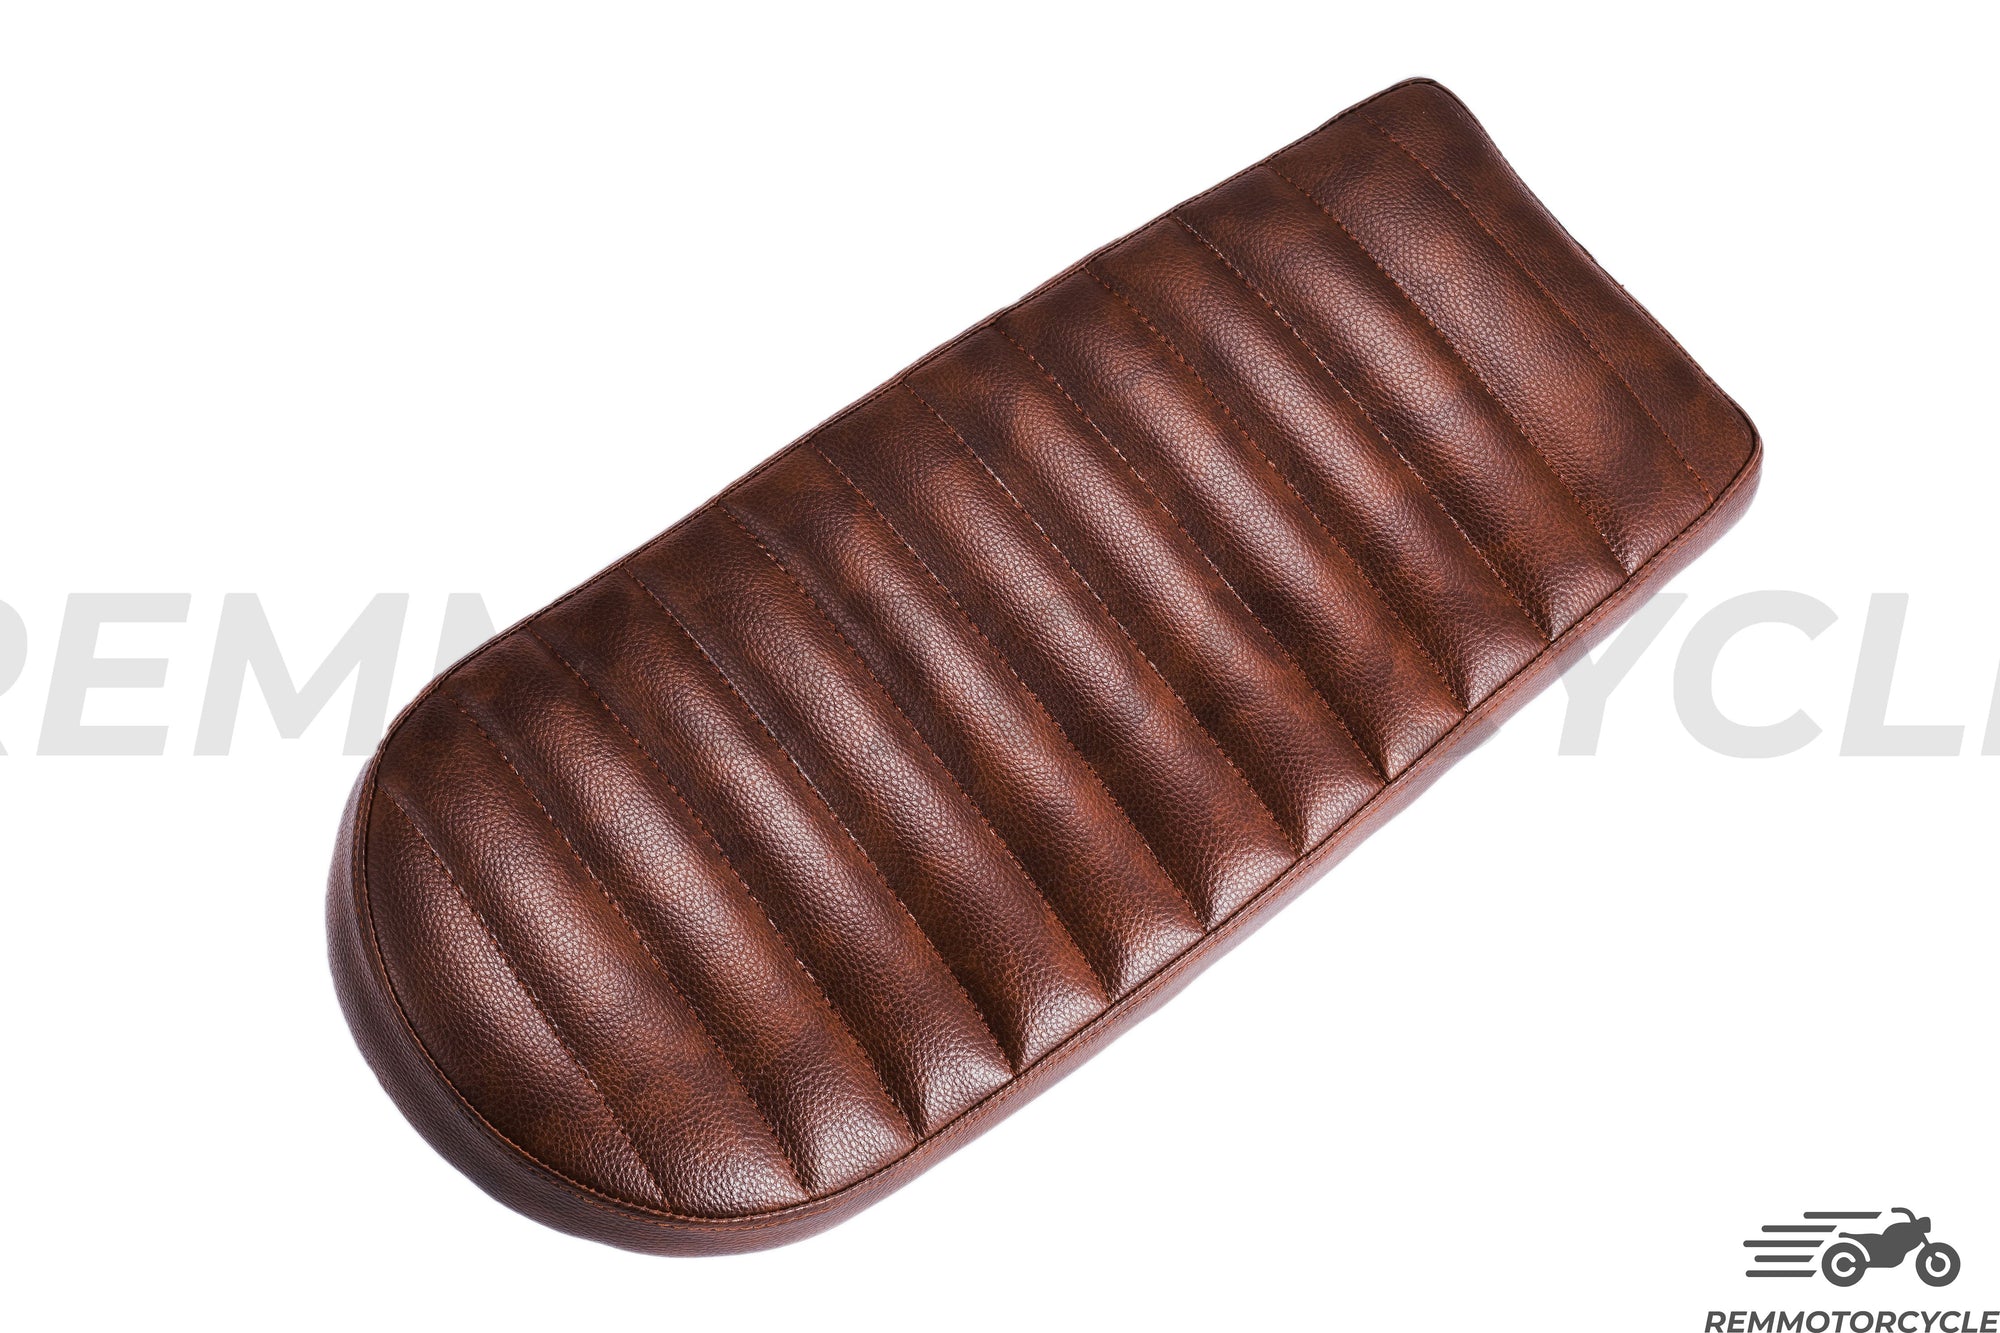 Rediceret brun sadel type 1 metal baggrund 50 eller 60 cm